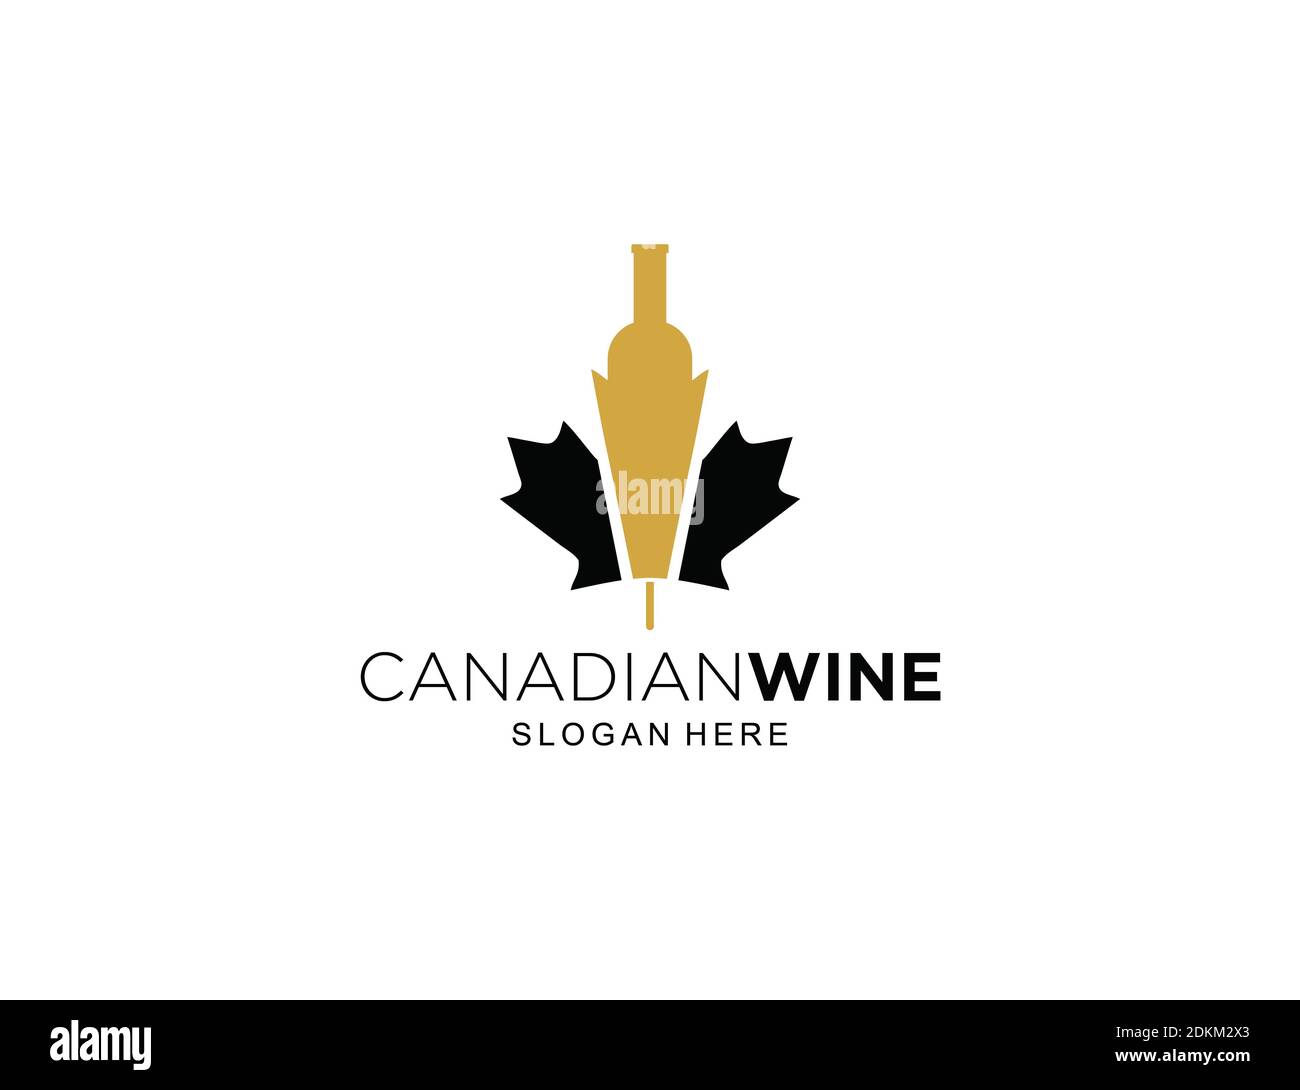 canadian wine or maple wine with golden bottle Logo Design inspiration Stock Photo